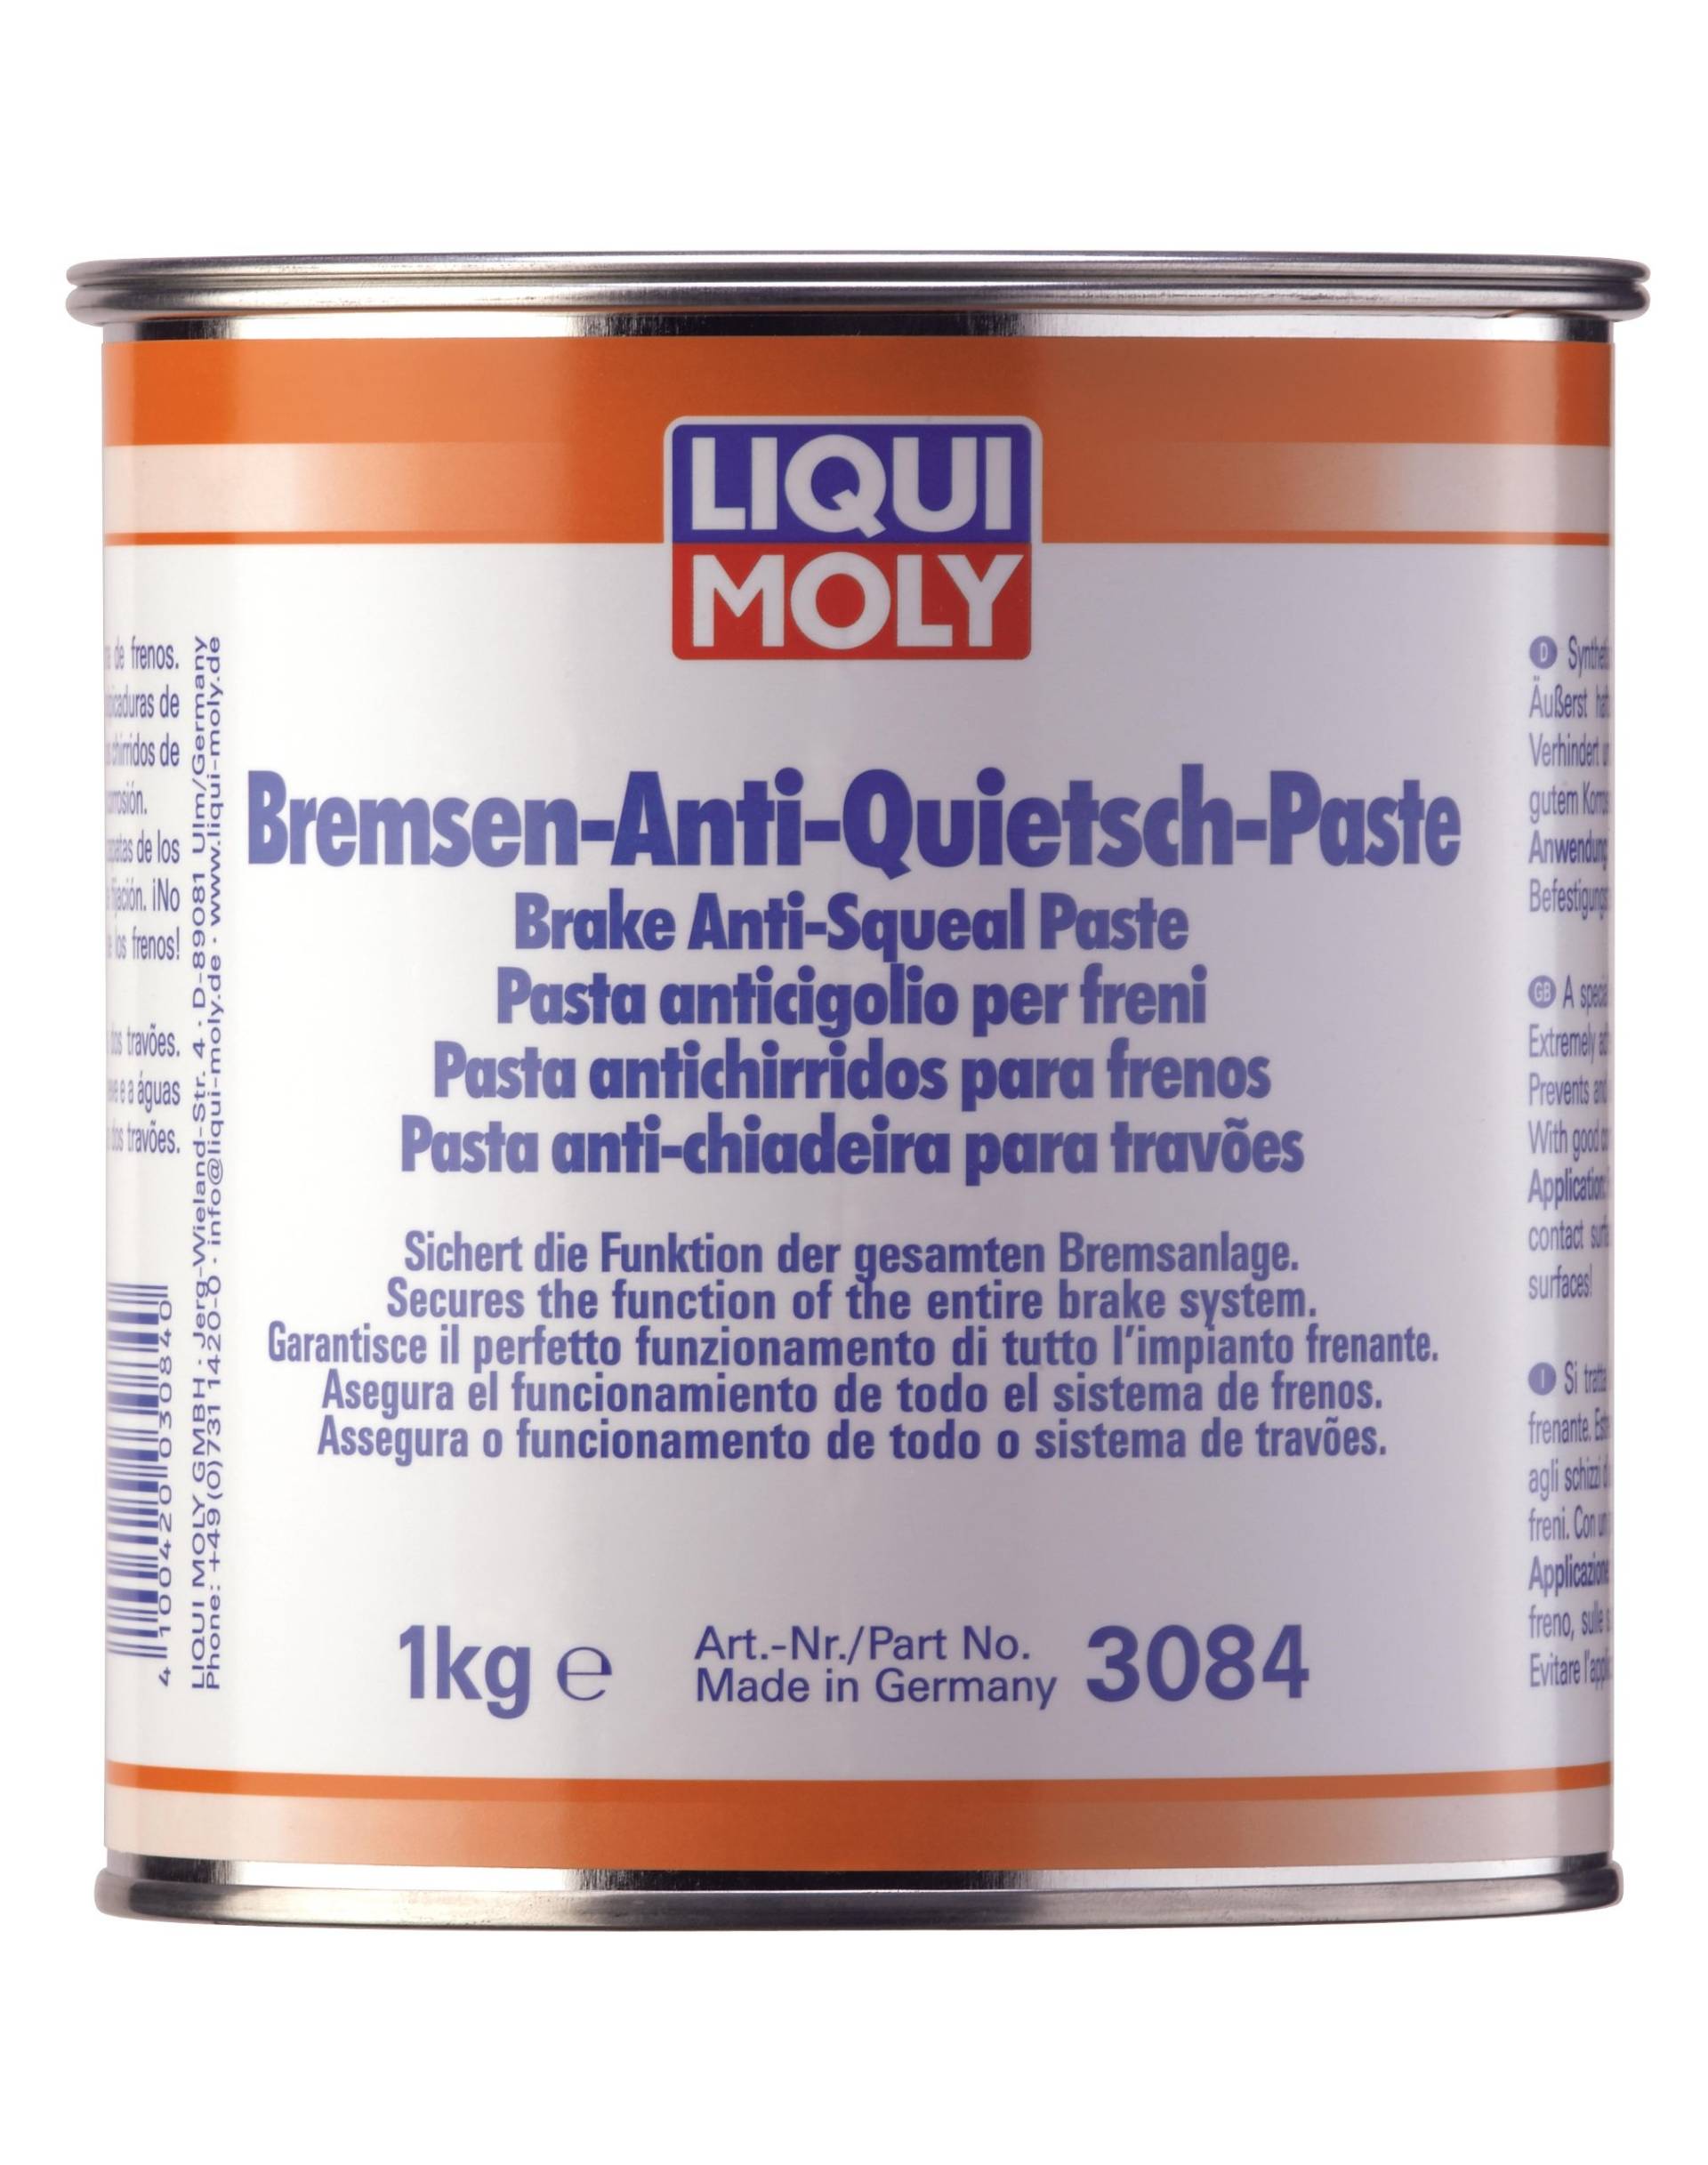 LIQUI MOLY Bremsen-Anti-Quietsch-Paste | 1 kg | Paste | Art.-Nr.: 3084 von Liqui Moly